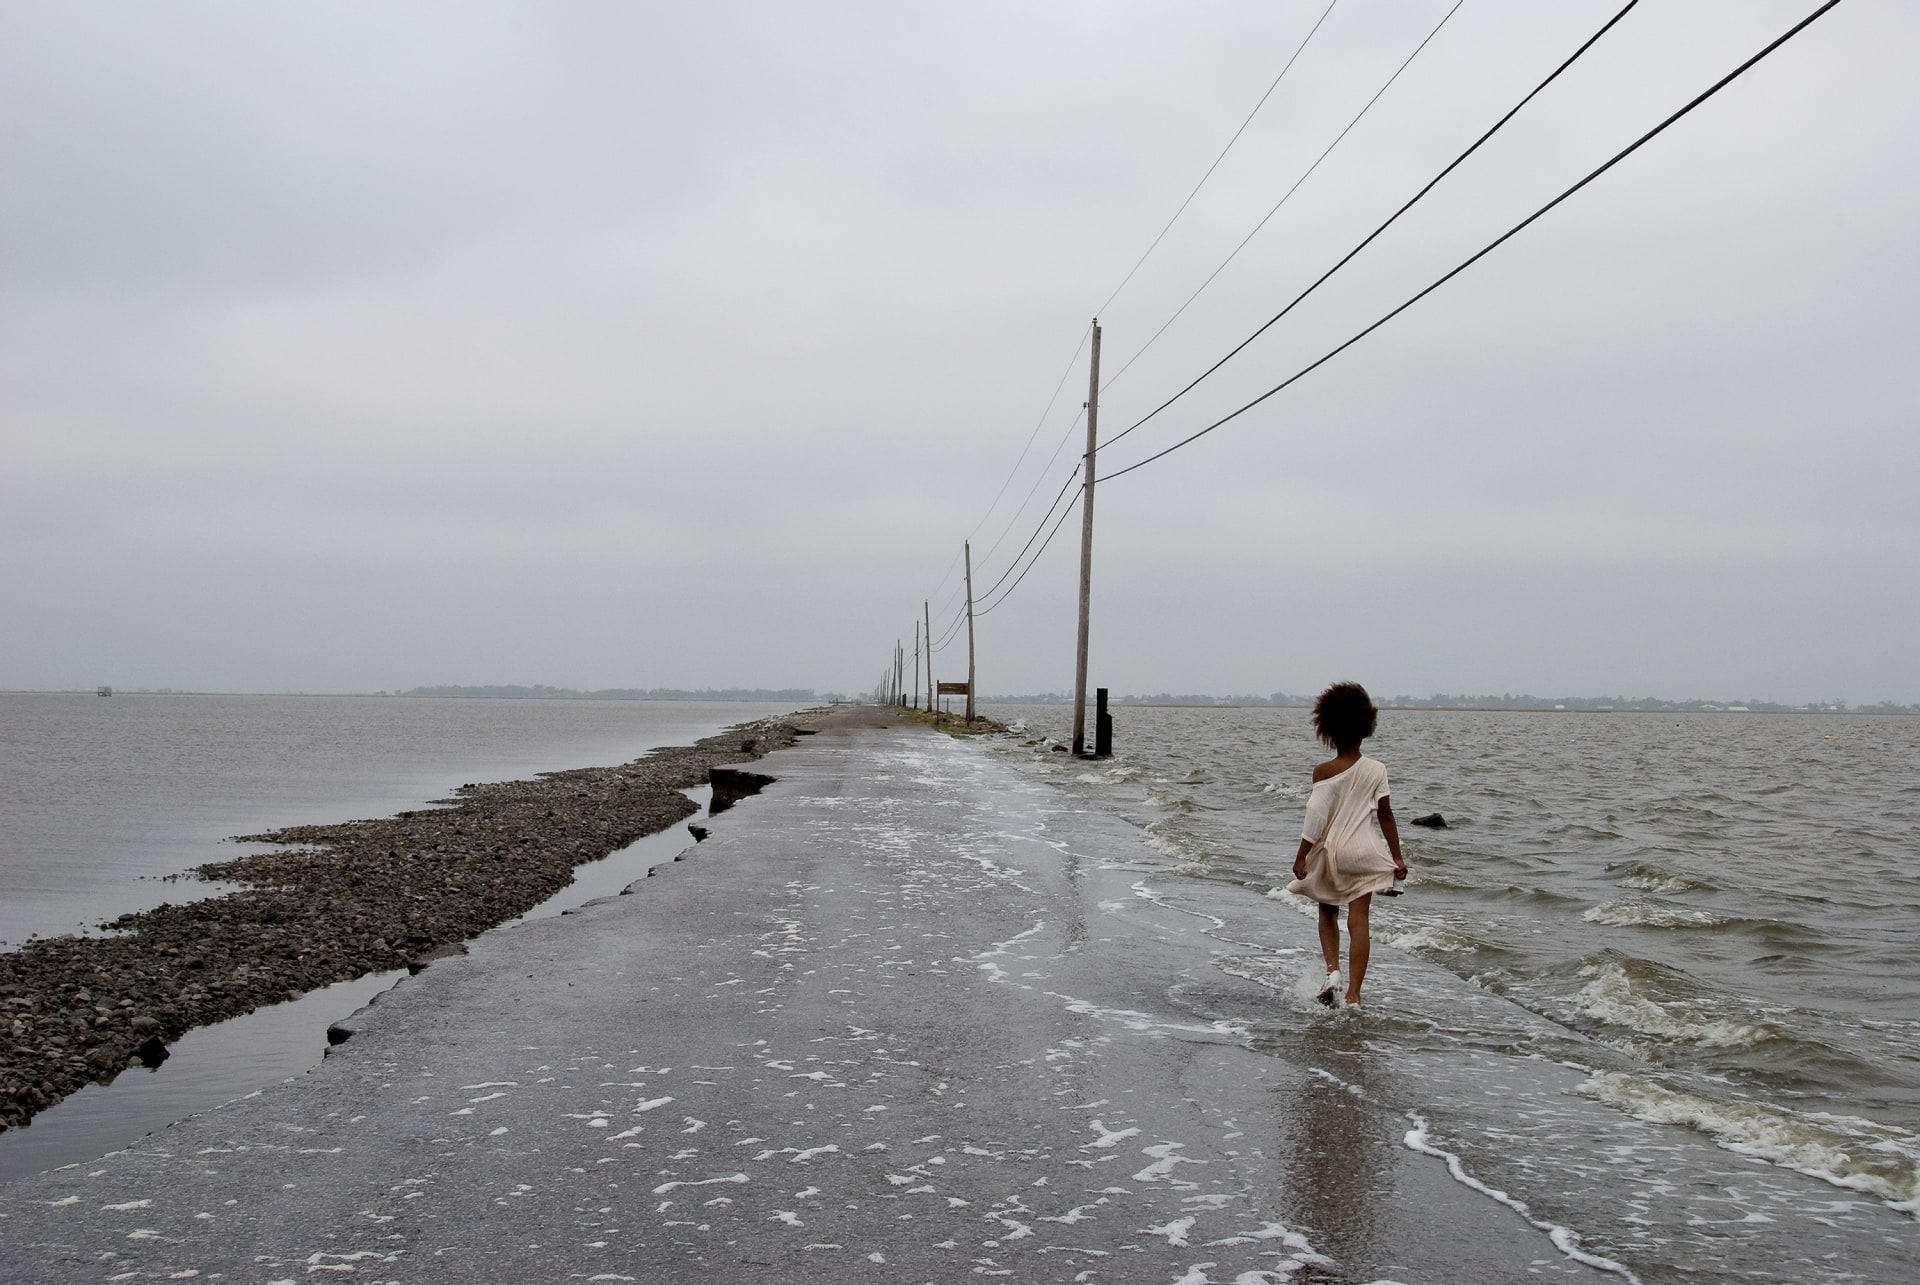 A young girl walks along a ruined, flooded road in Isle de Jean, Louisiana.
